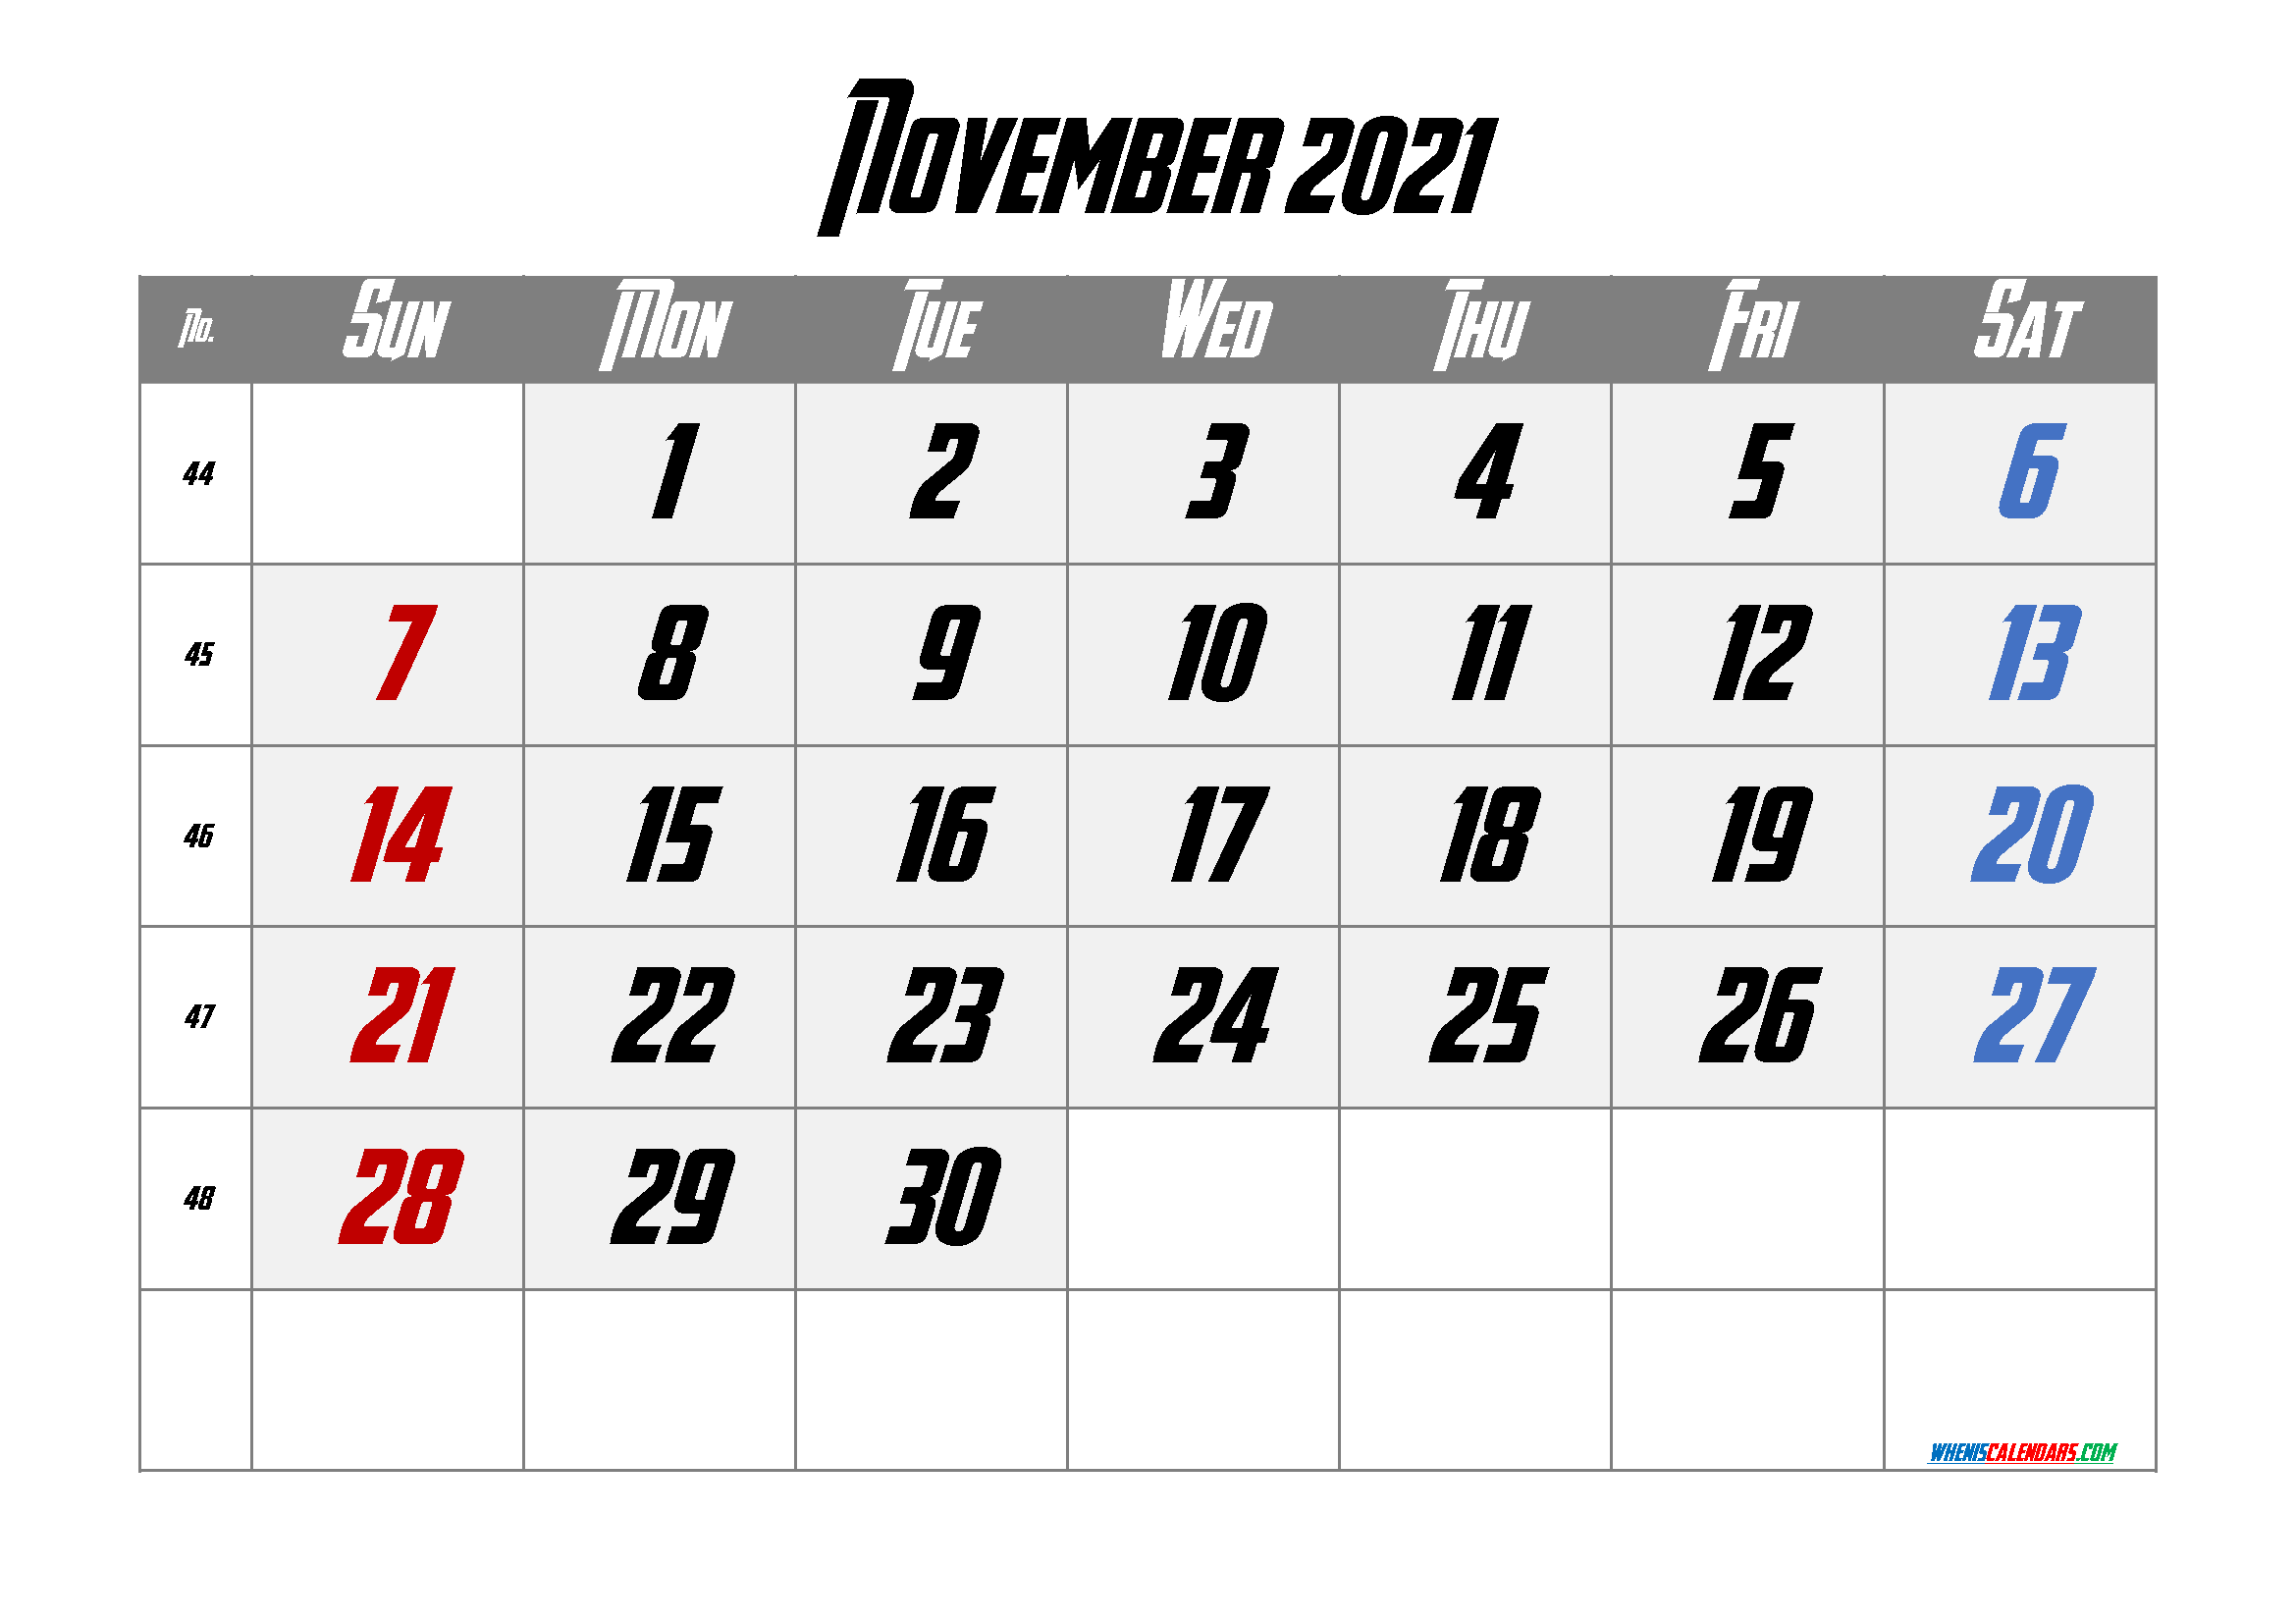 Editable November 2021 Calendar